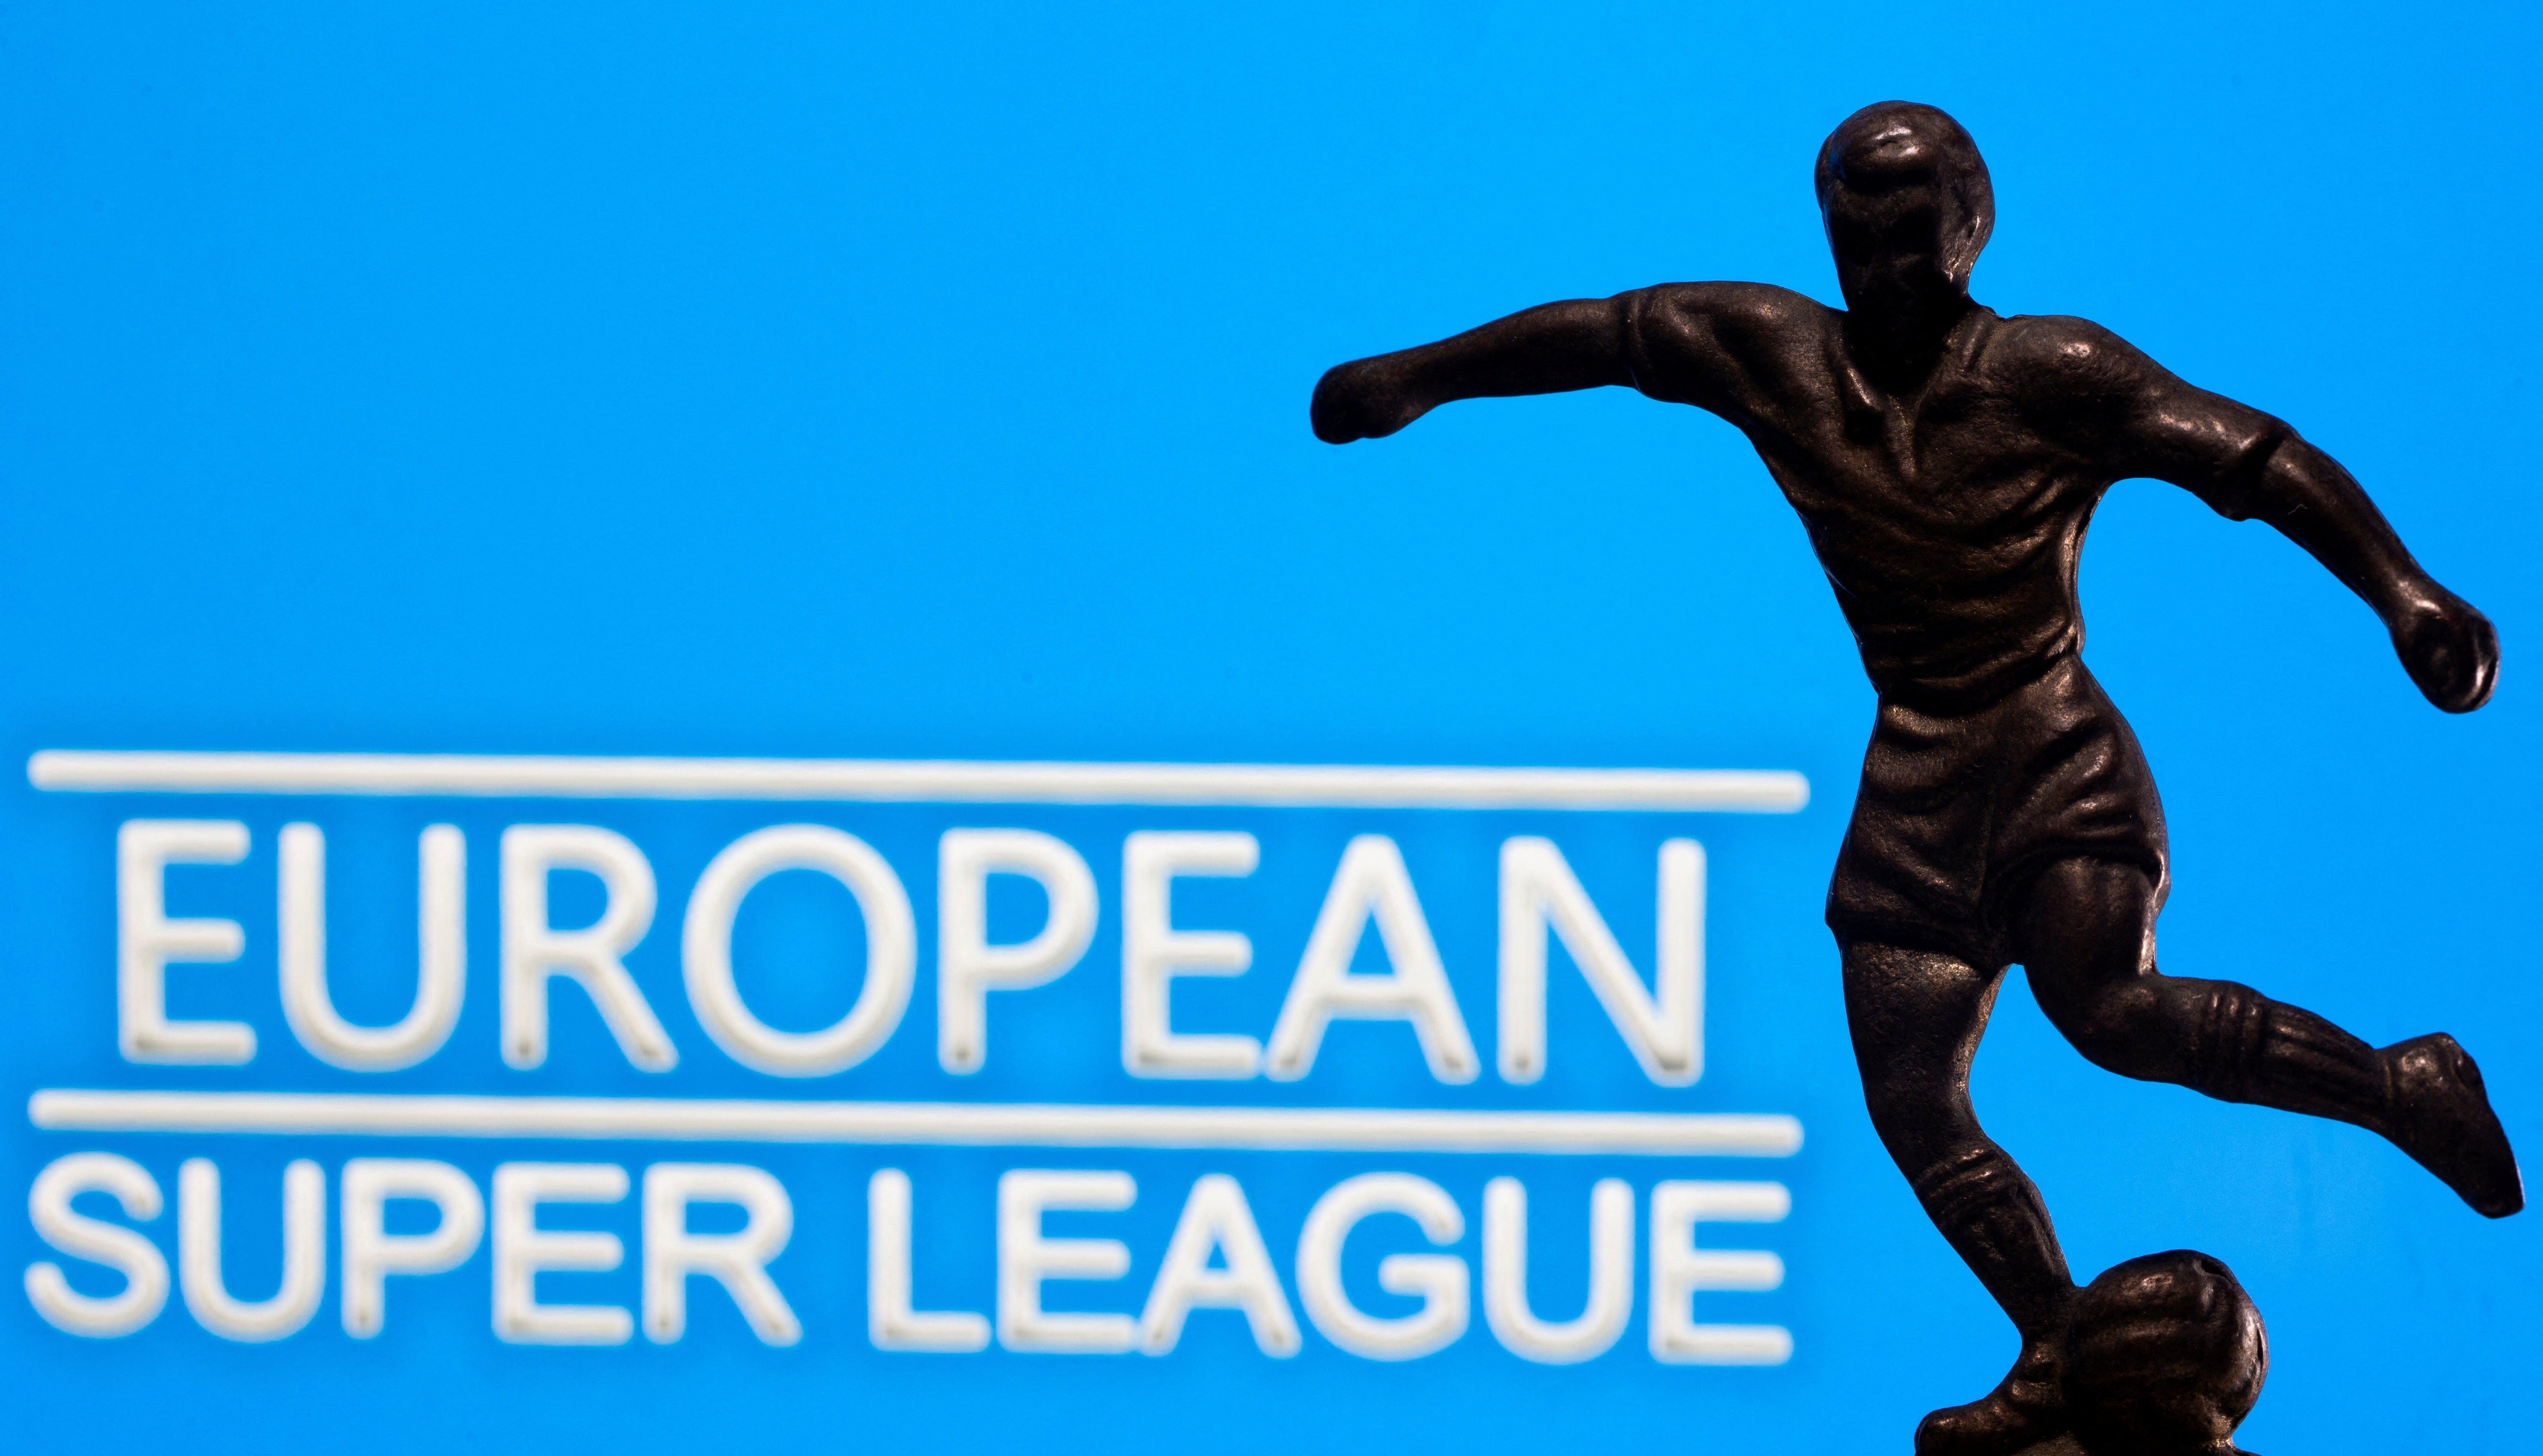 The European Super League is back